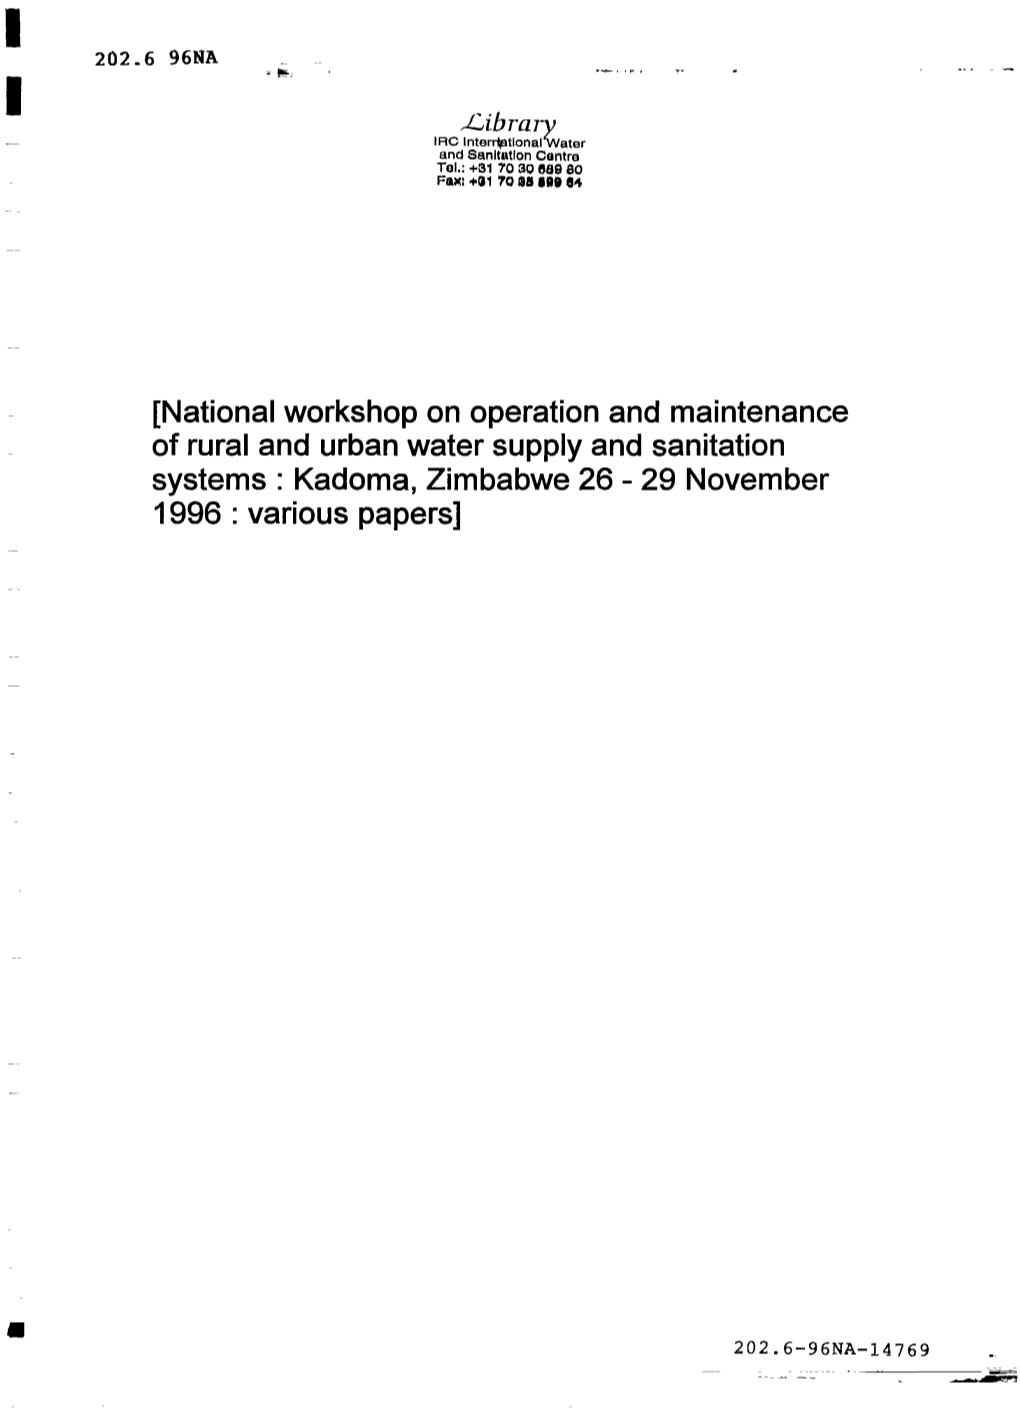 Nationalworkshop on Operation and Maintenance of Rural and Urban Water Supply and Sanitation Systems: Kadoma, Zimbabwe 26 -29 November 1996 : Various Papers]